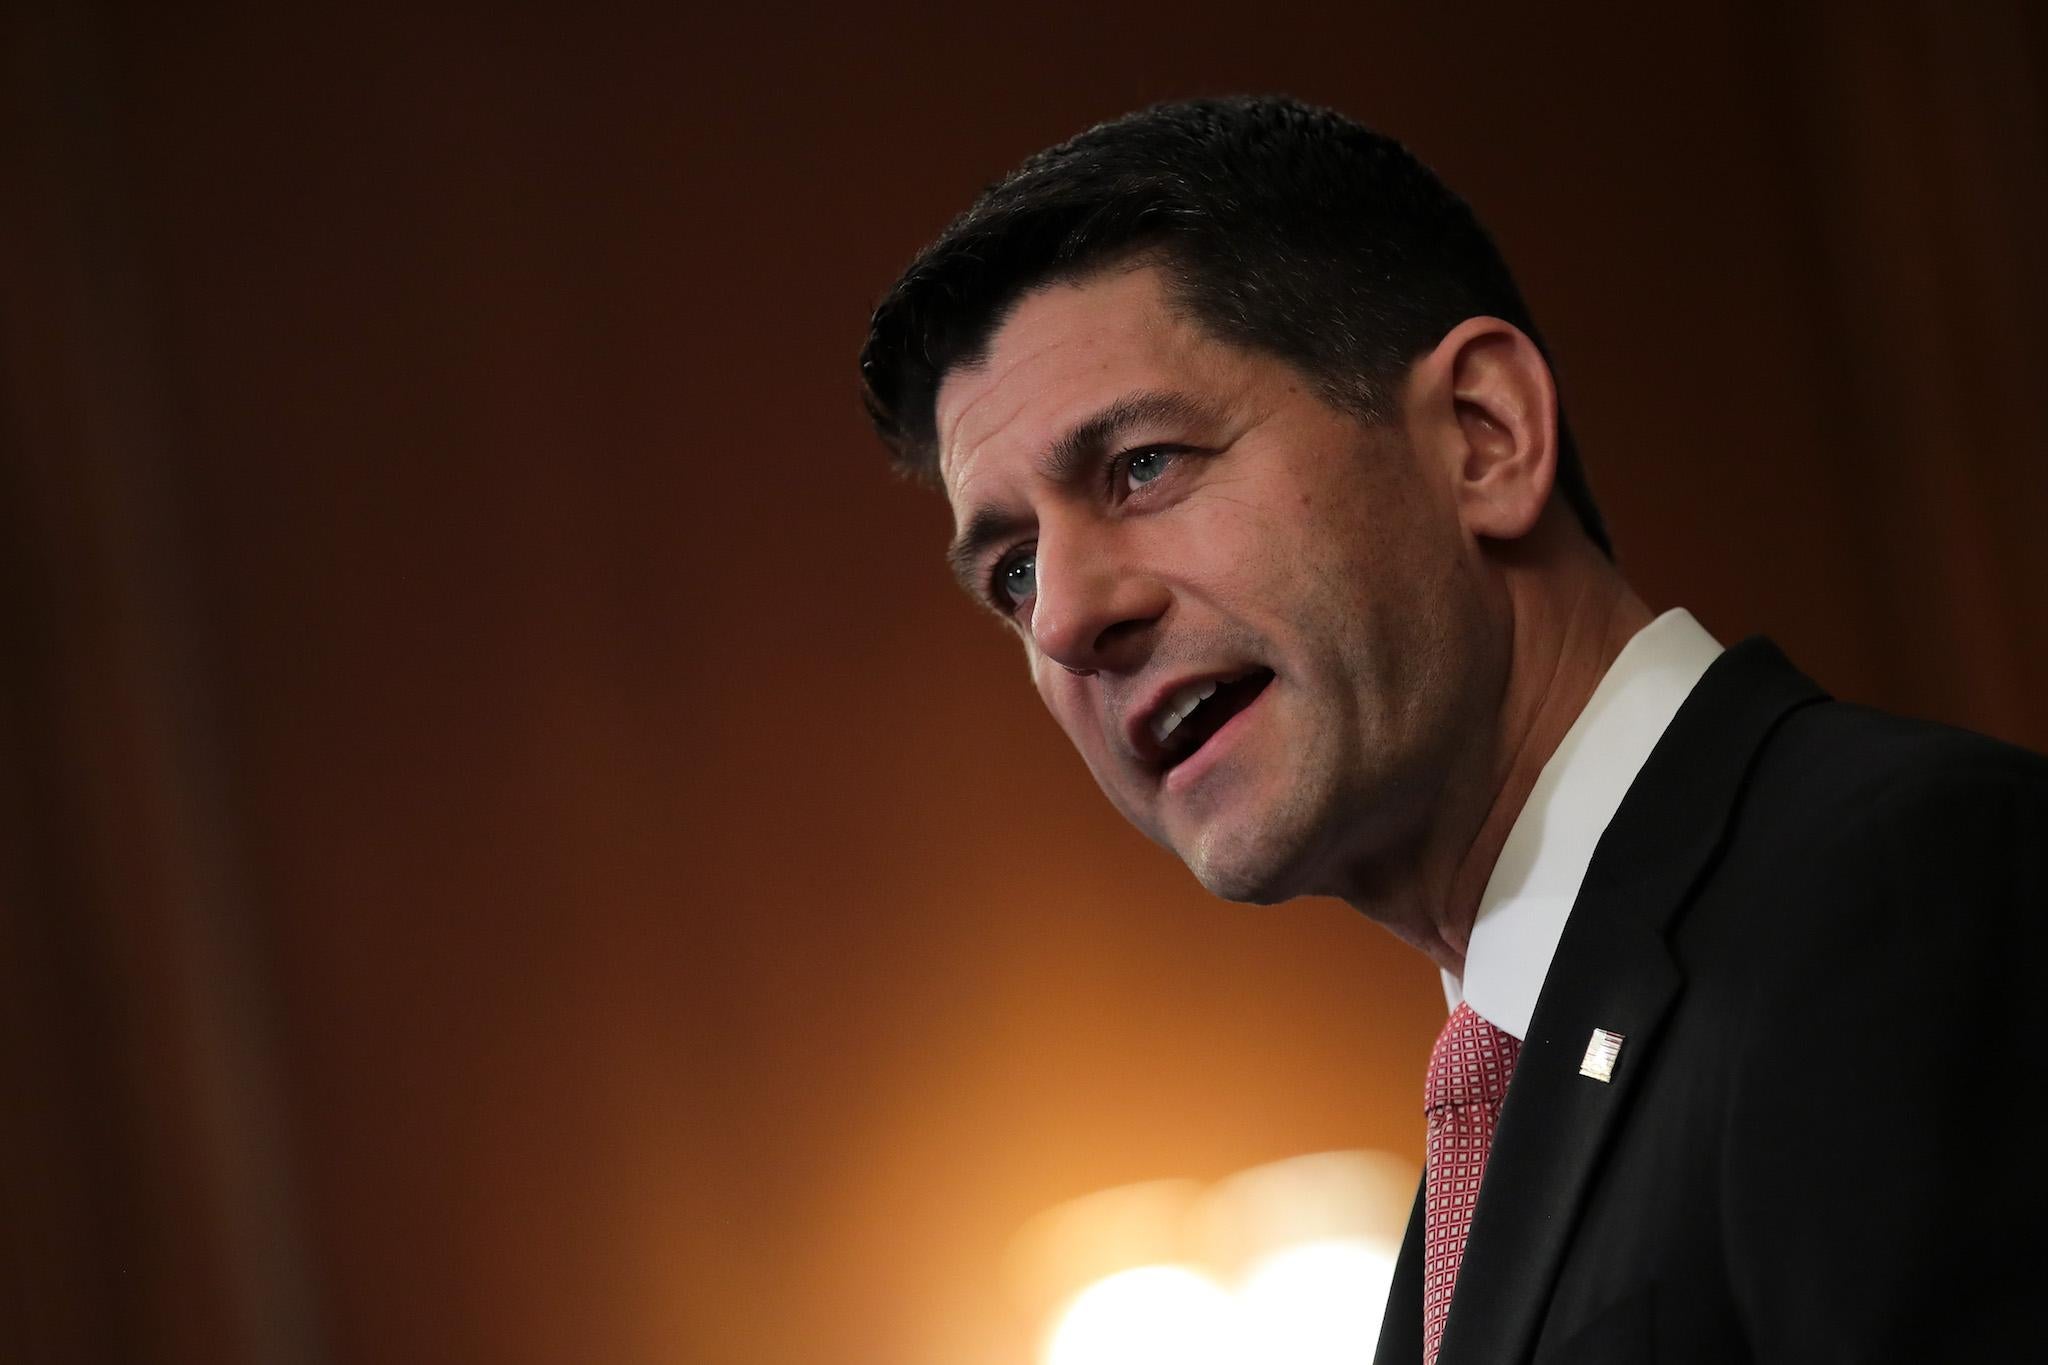 Speaker Paul Ryan has said he would consider banning bump stocks